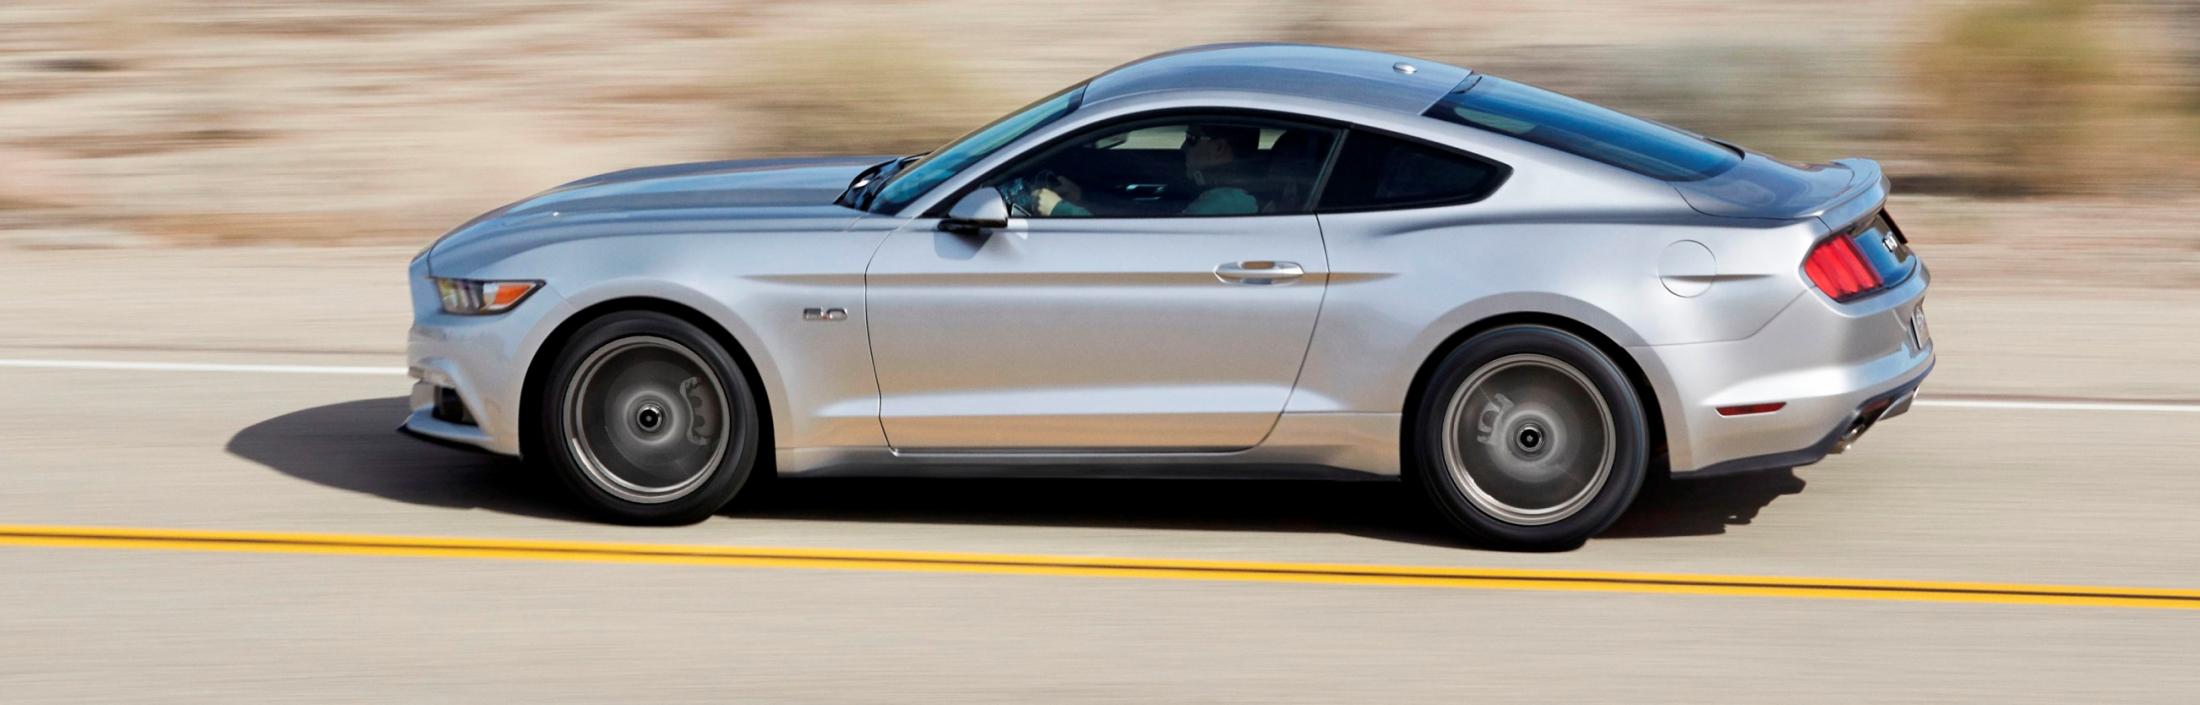 2015-Ford-Mustang-GT-in-Silver-19.jpg